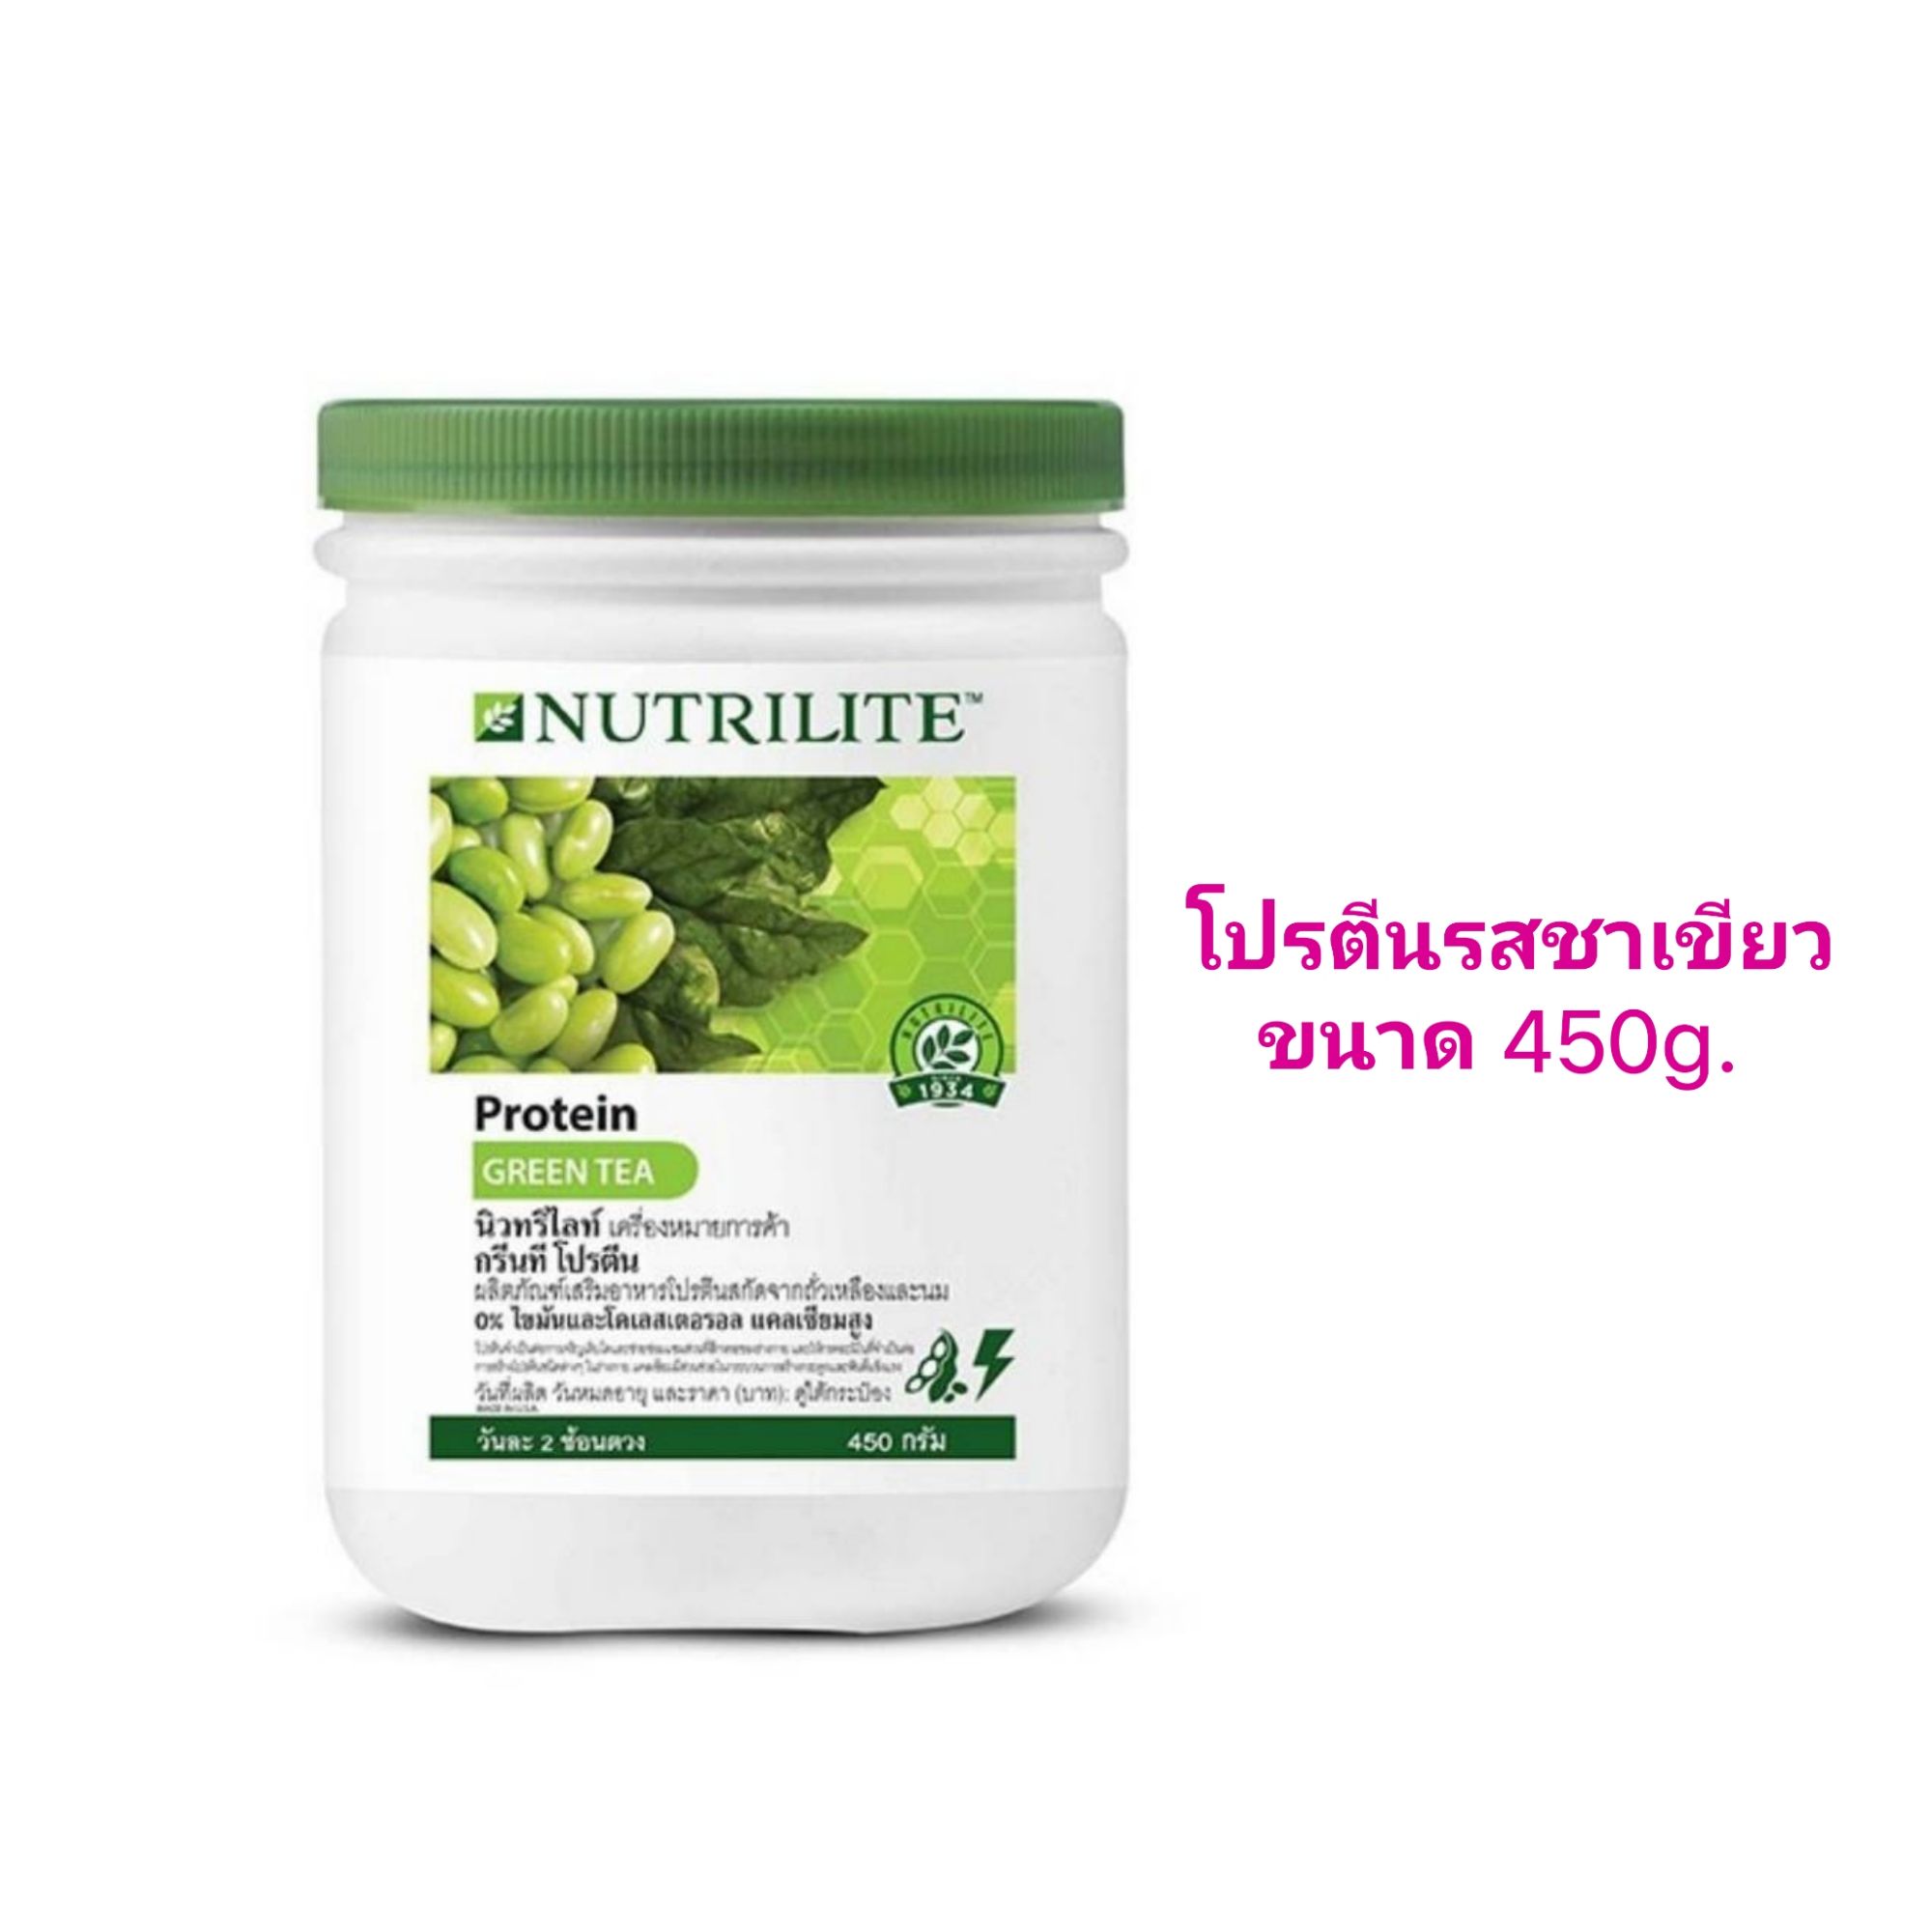 Amway Nutrilite Green Tea Protein ขนาด 450g.